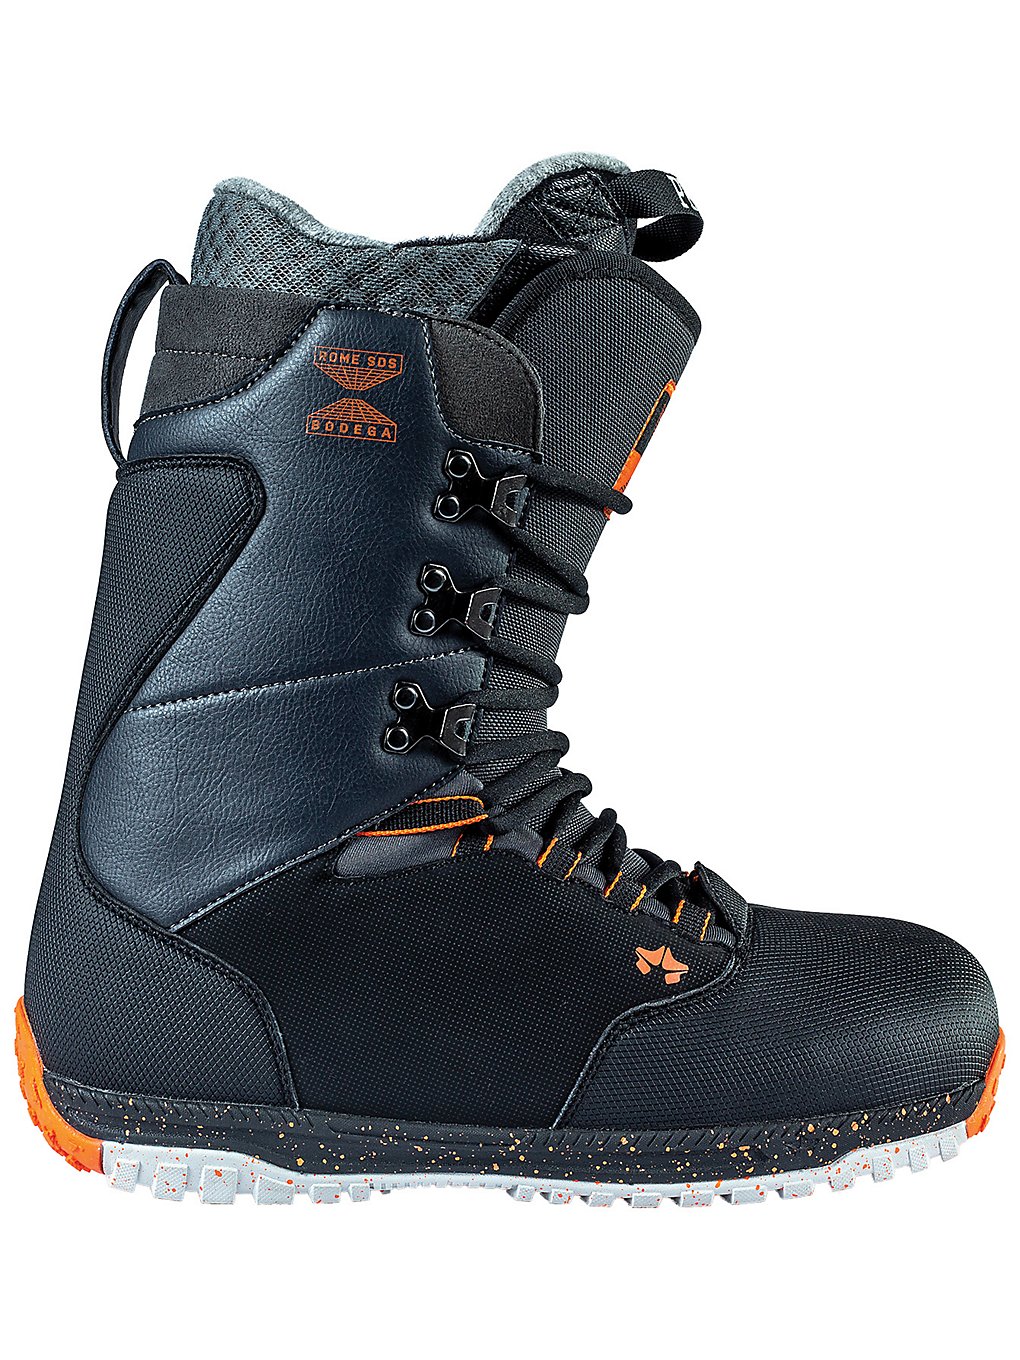 Rome Bodega Lace 2022 Snowboard Boots black